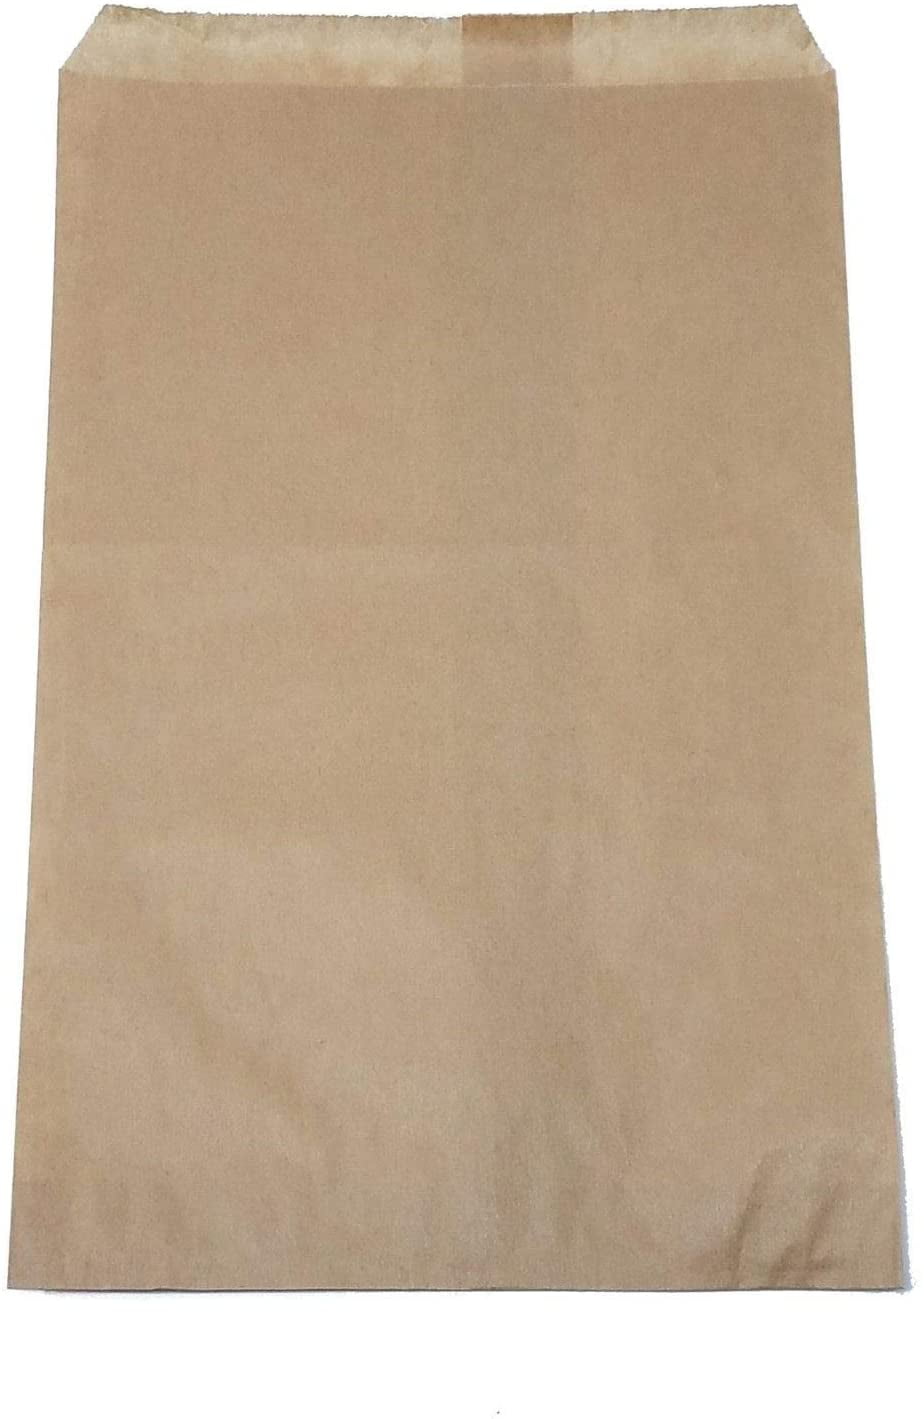 Brown Kraft Strung Paper Bags Food Sandwich Grocery Gift Retail 